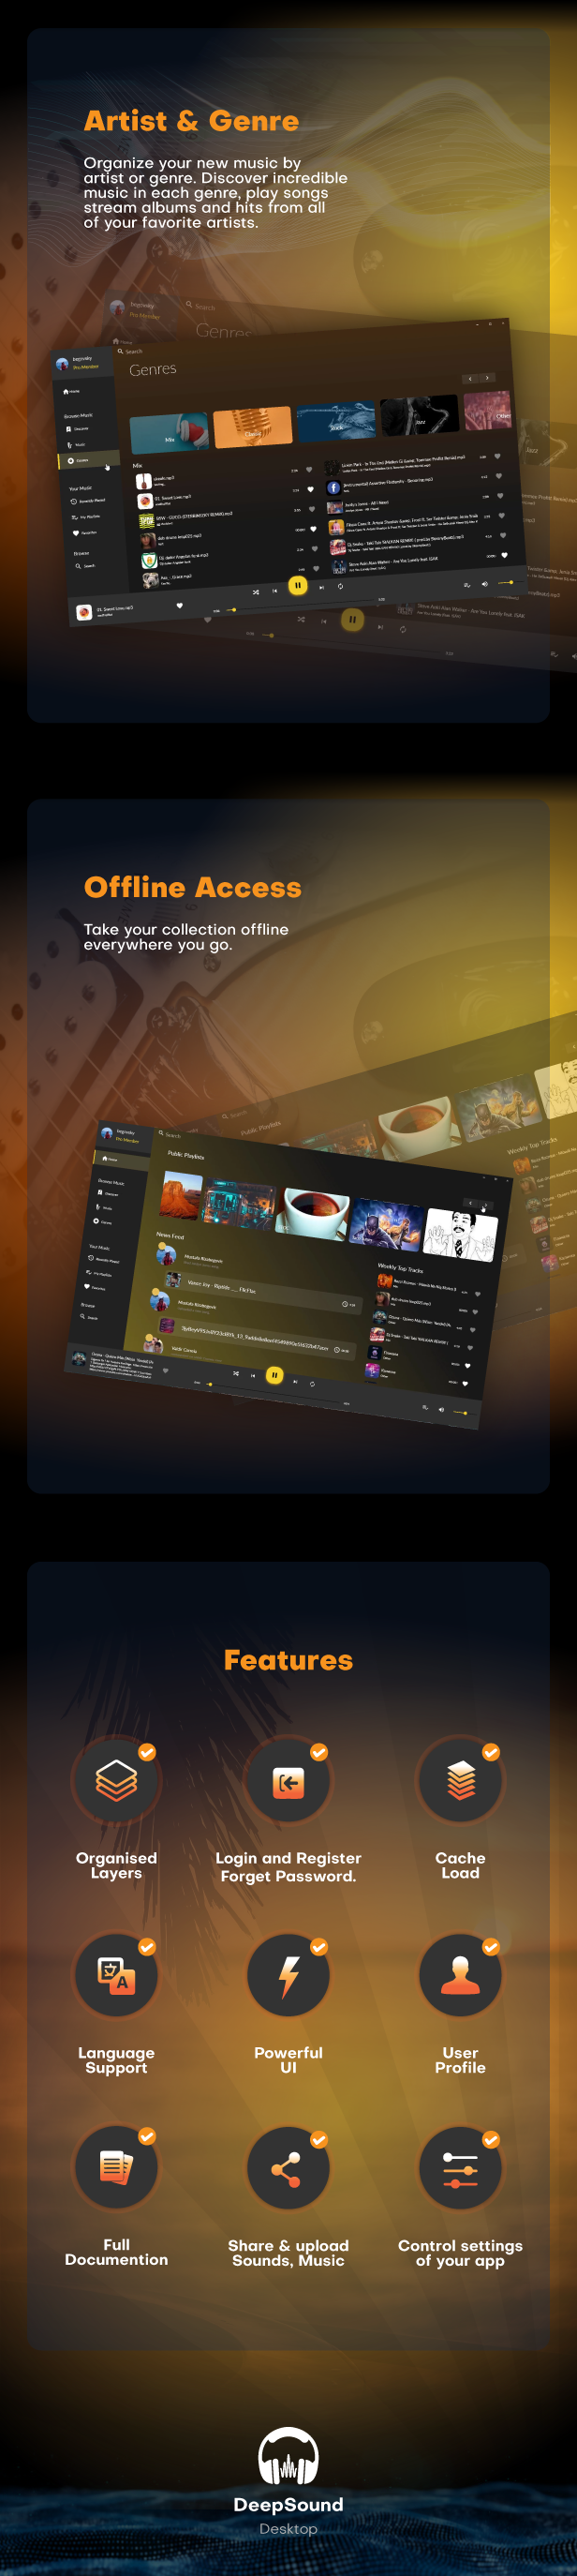 DeepSound Desktop - A Windows Sound & Music Sharing Platform Application - 6